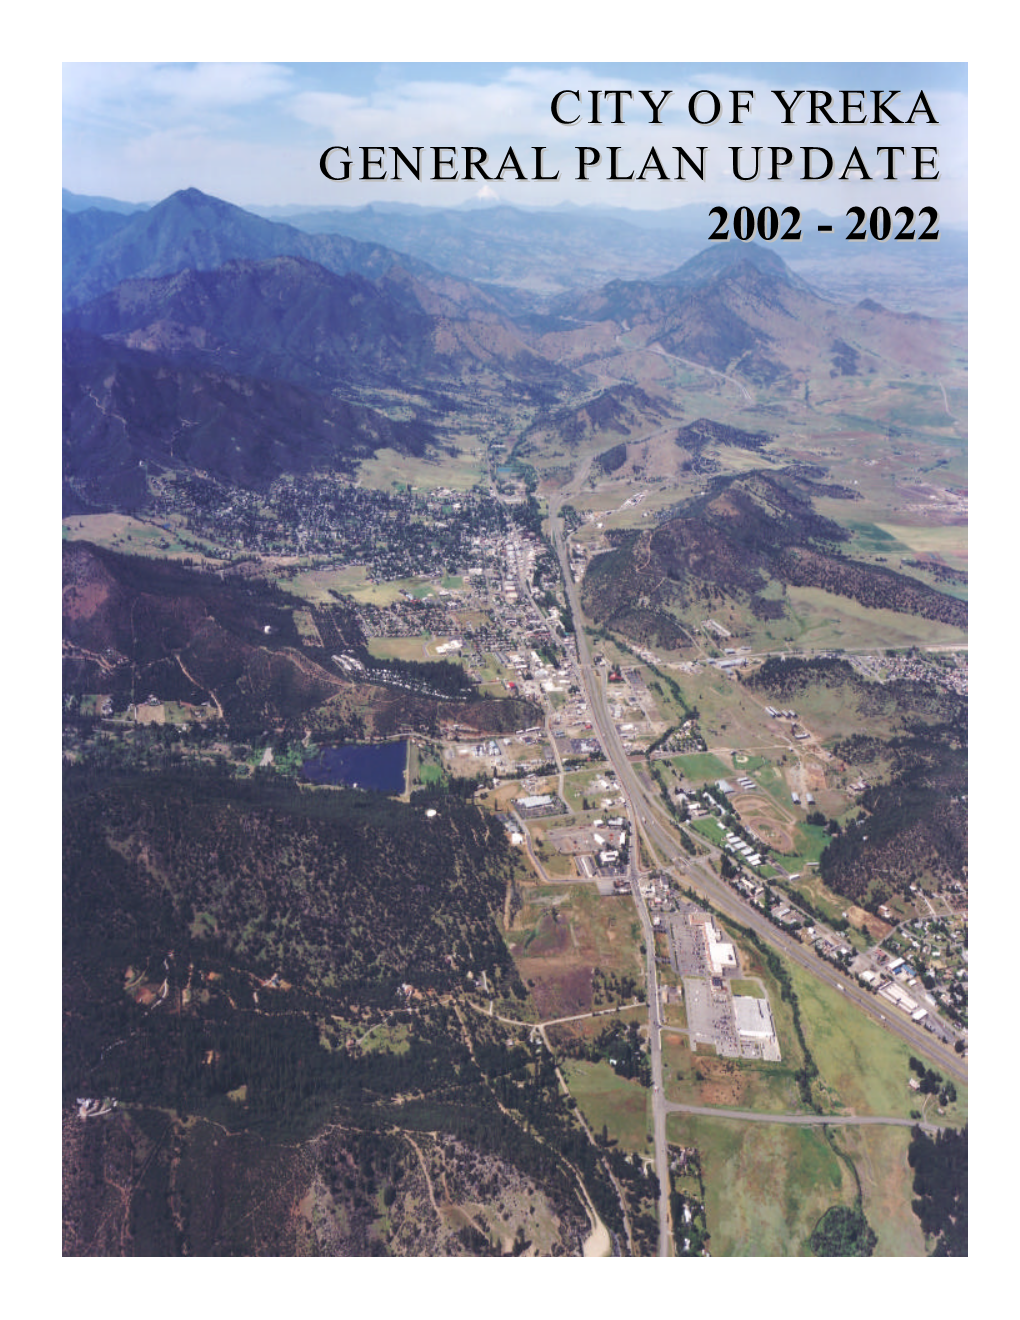 City of Yreka General Plan Update 2002